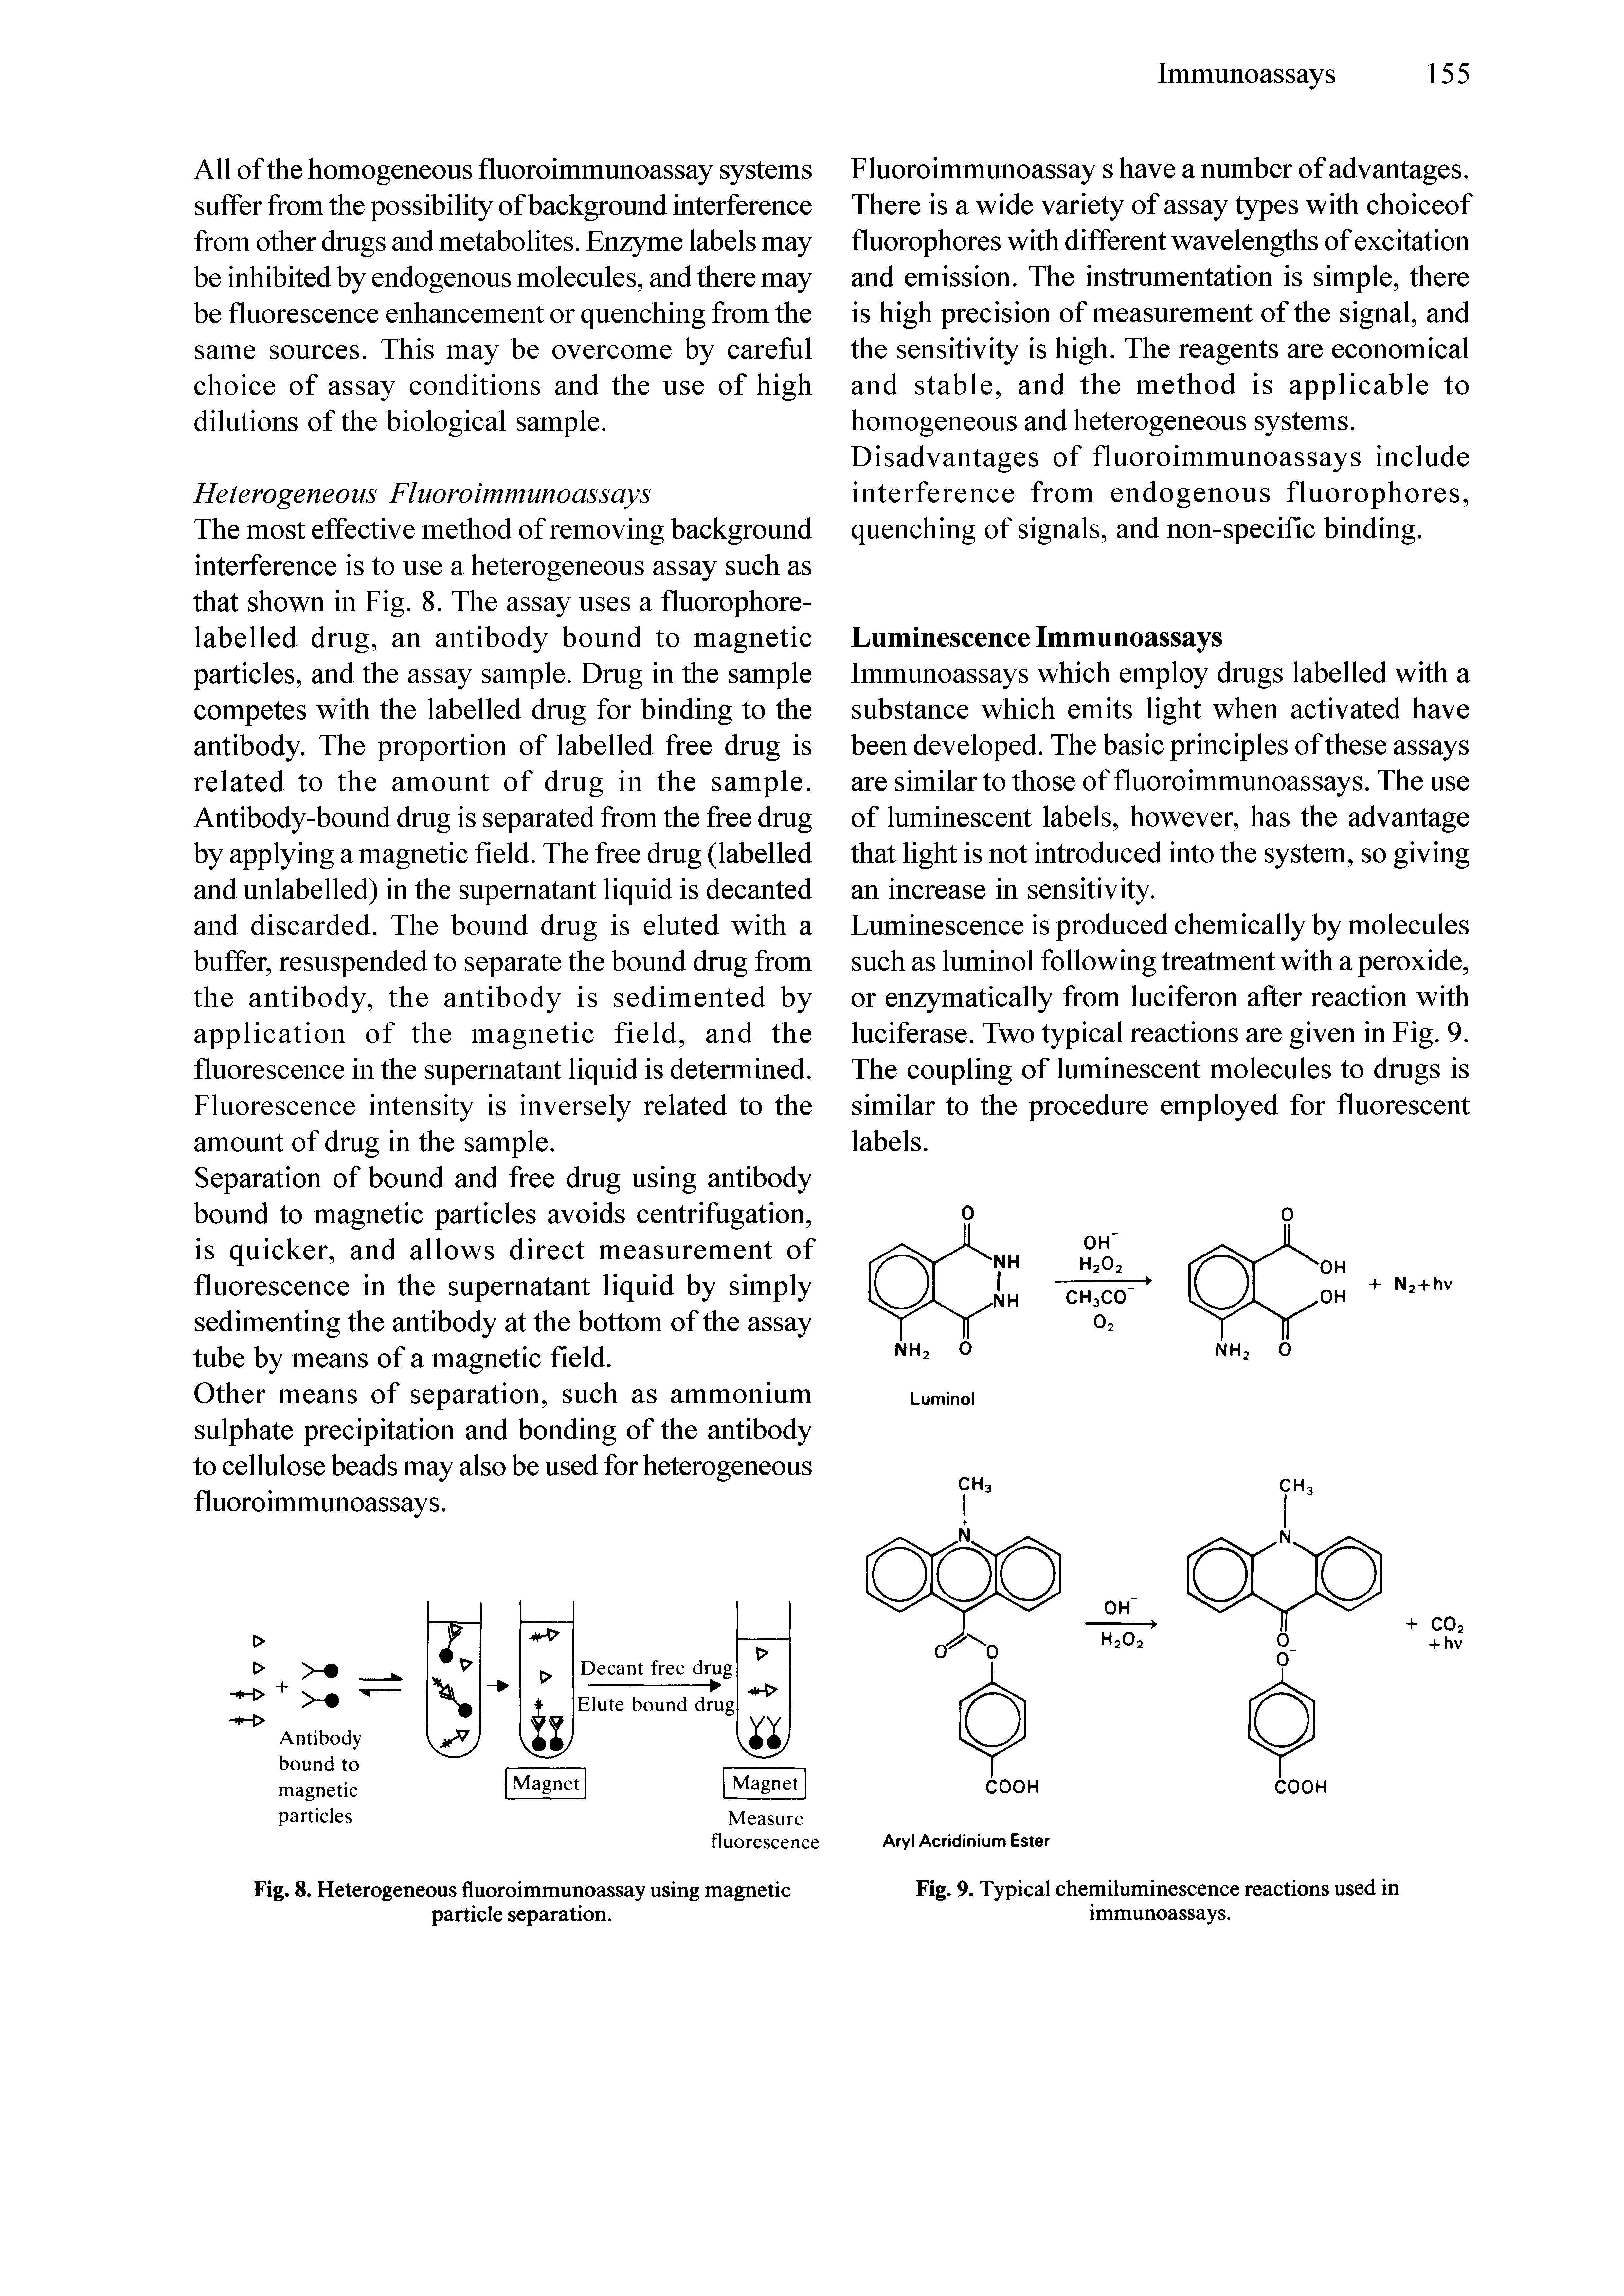 Fig. 8. Heterogeneous fluoroimmunoassay using magnetic particle separation.